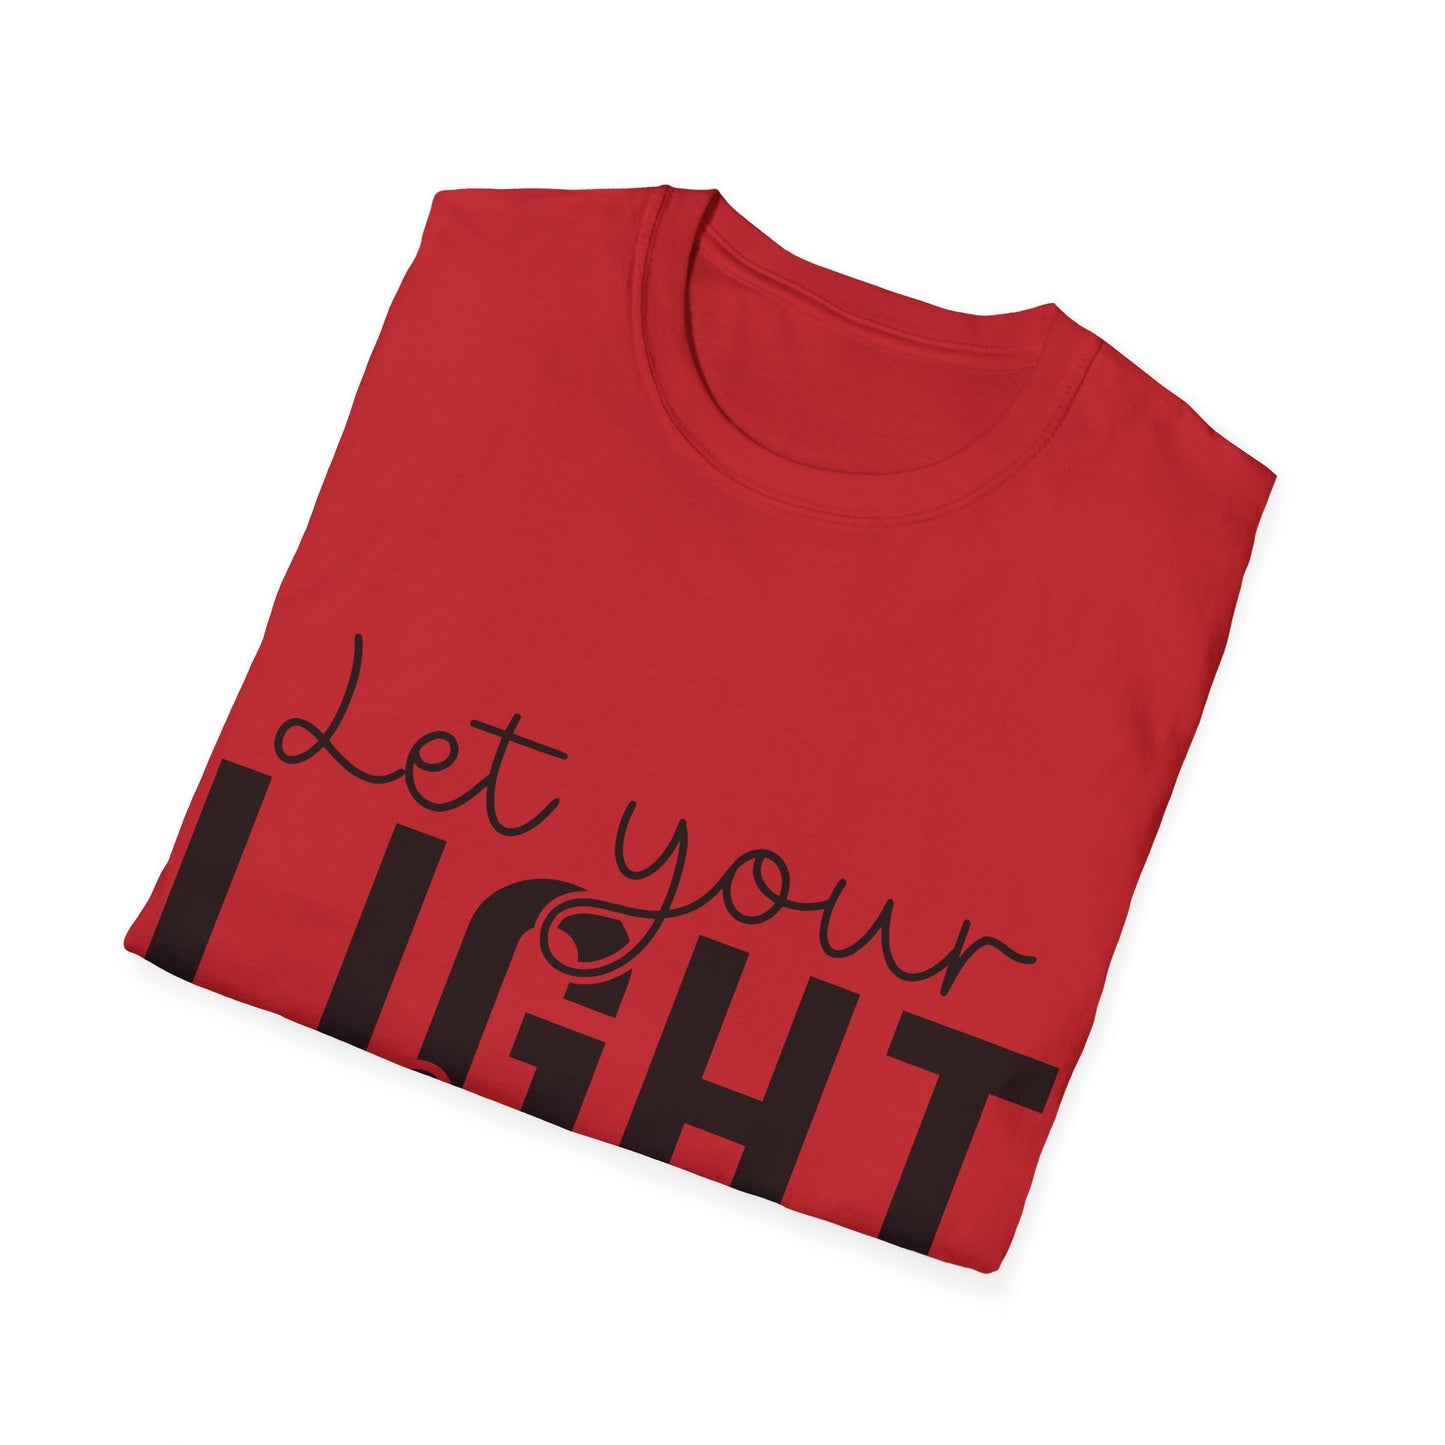 Let Your Light Shine Matthew 5,16 (2) Triple Viking T-Shirt